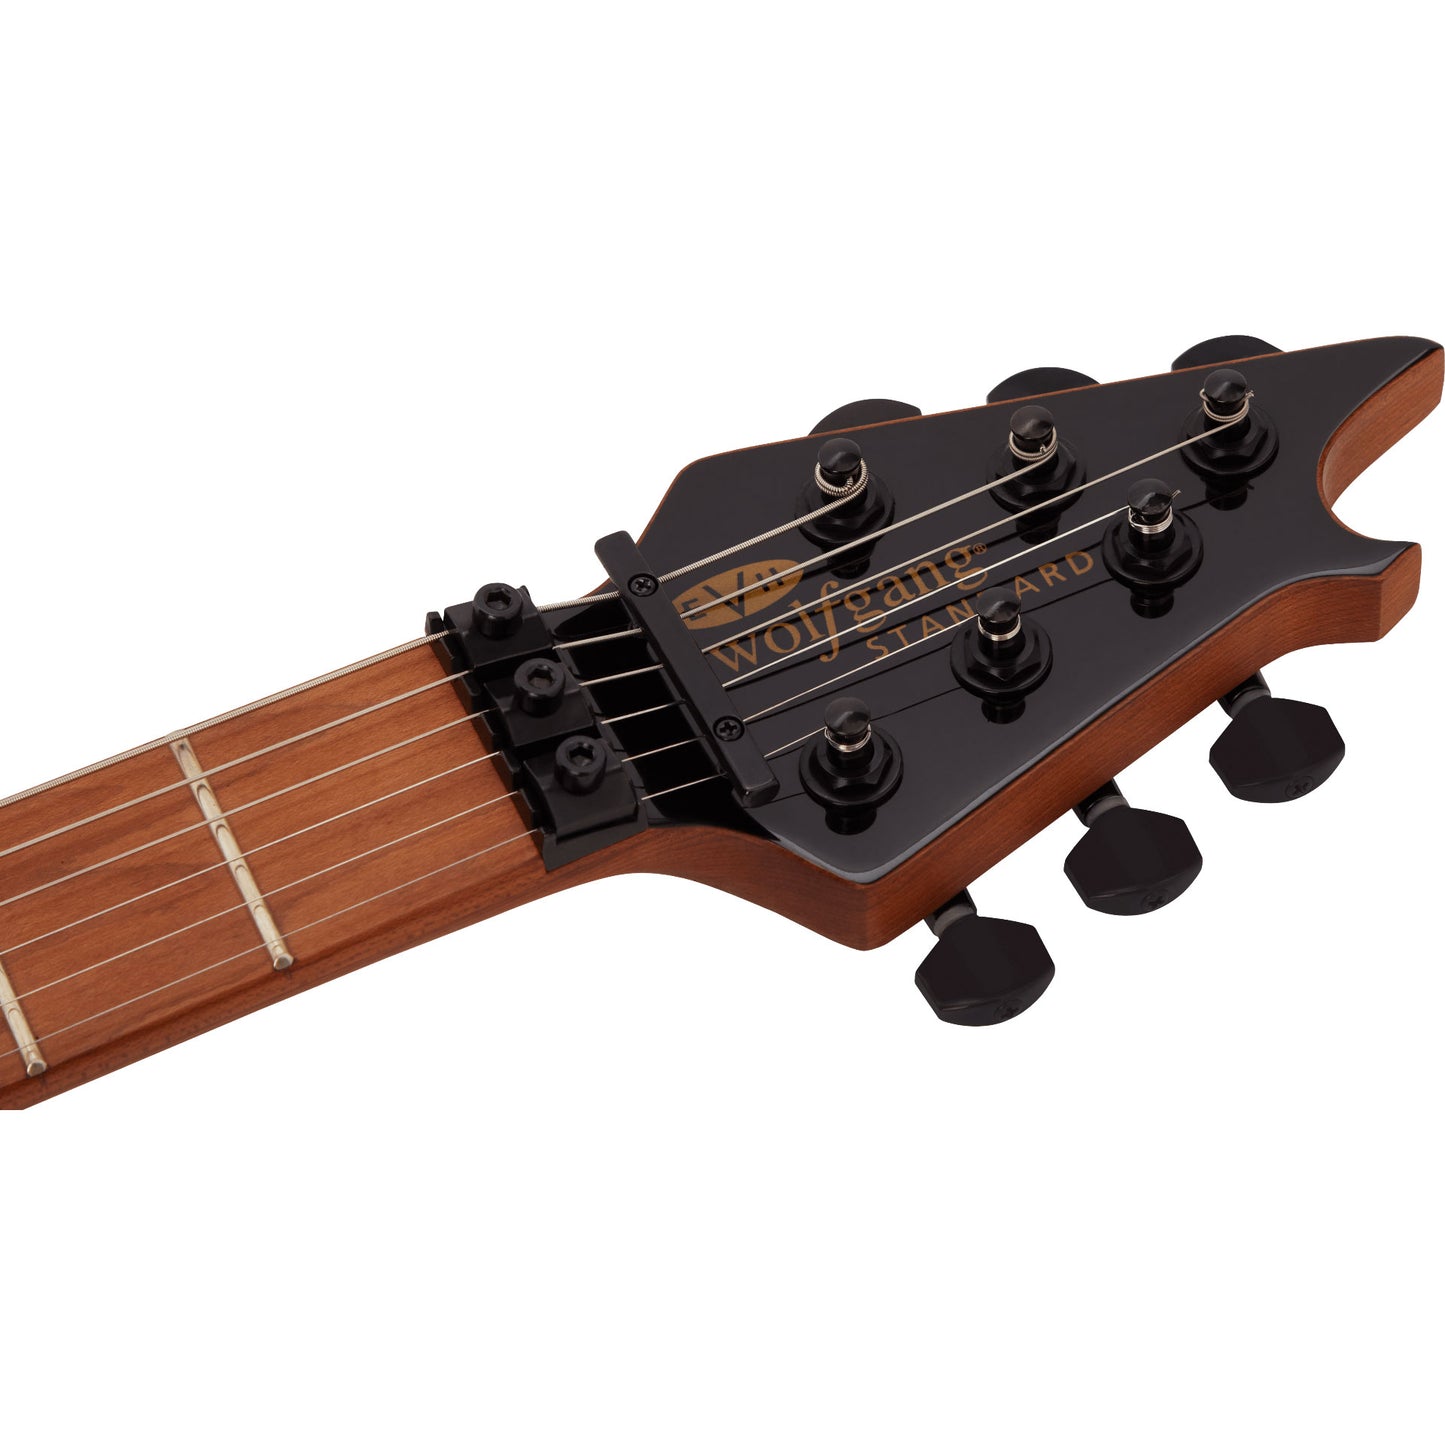 EVH Wolfgang® Standard Electric Guitar Baked Maple Fingerboard, Stryker Red